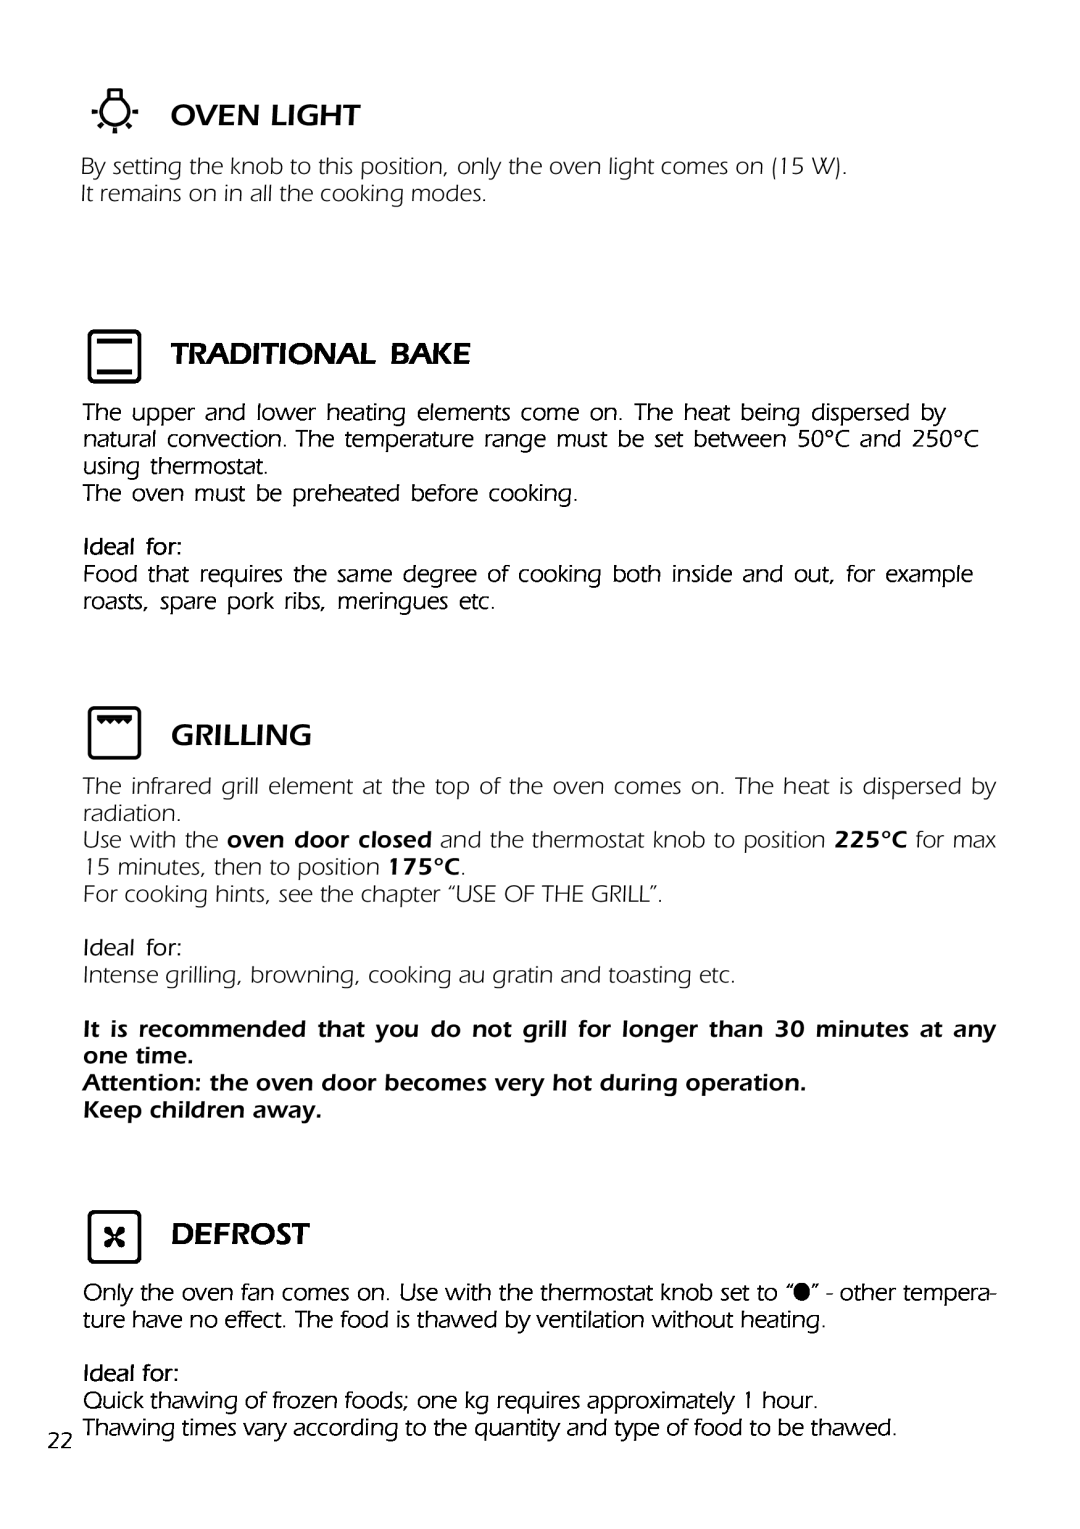 DeLonghi DS 61 GW manual Oven Light, Traditional Bake, Grilling, Defrost 